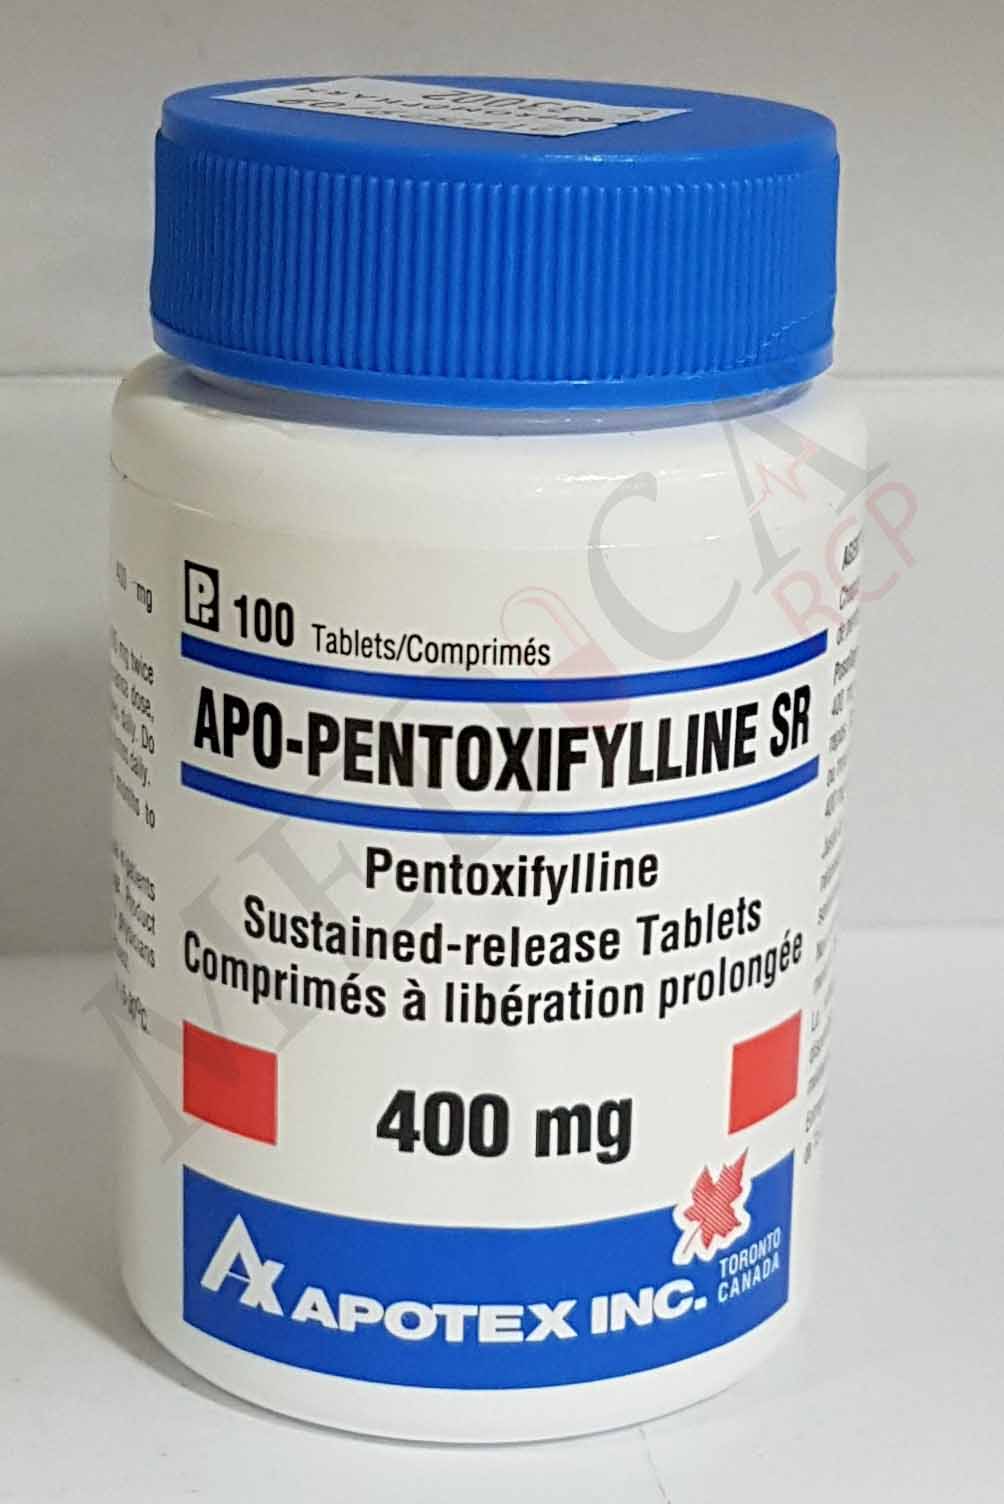 Apo-Pentoxifylline SR